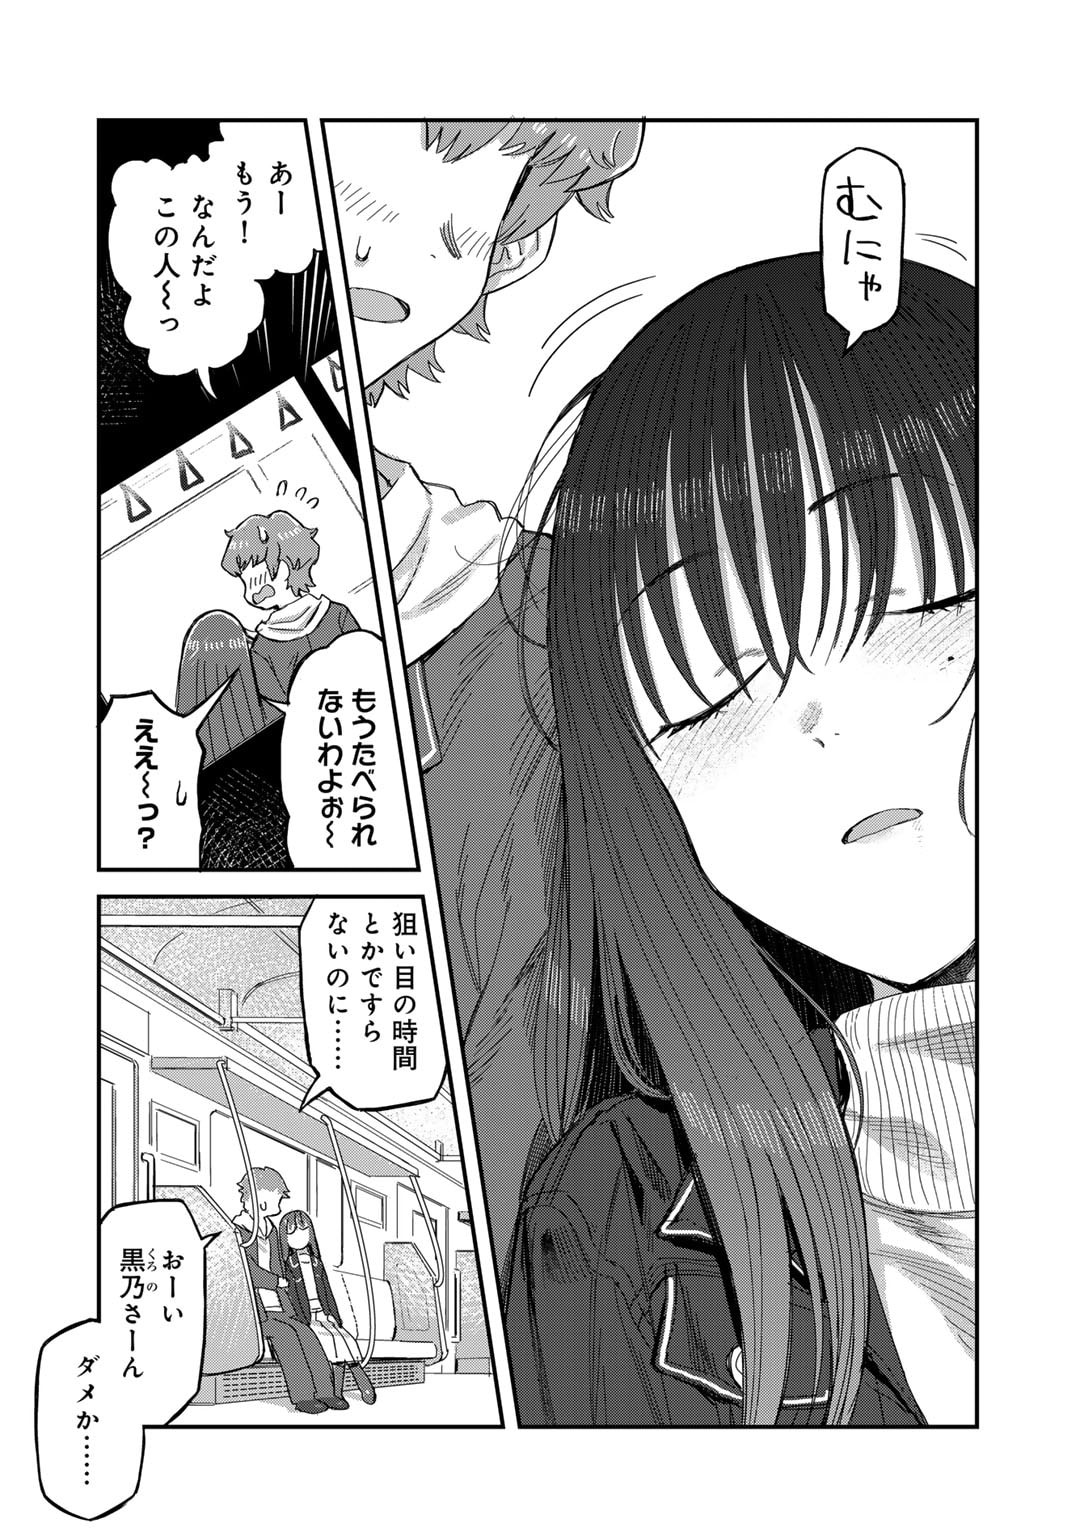 Kurono-san wa Occult ga Suki! - Chapter 4 - Page 8